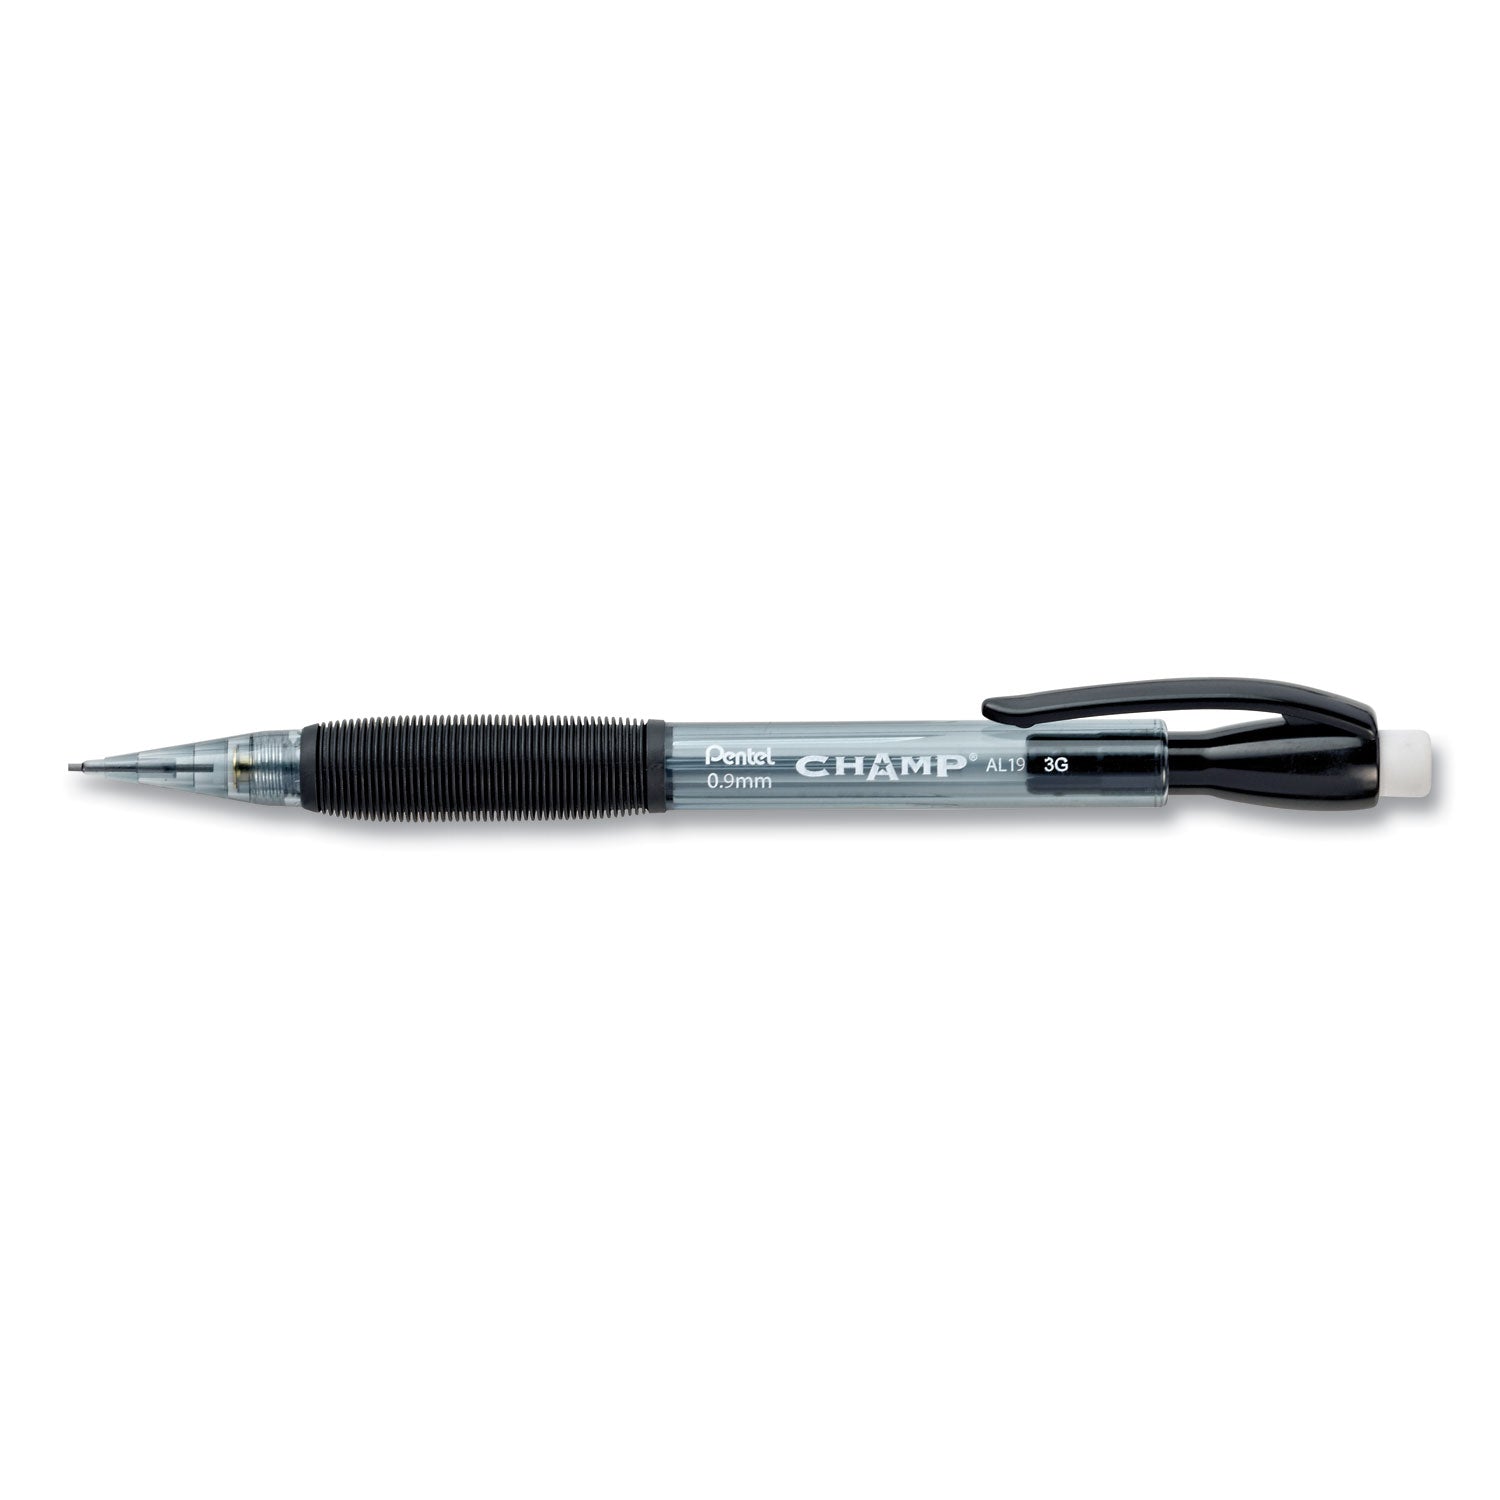 champ-mechanical-pencil-09-mm-hb-#2-black-lead-clear-black-barrel-dozen_penal19a - 1